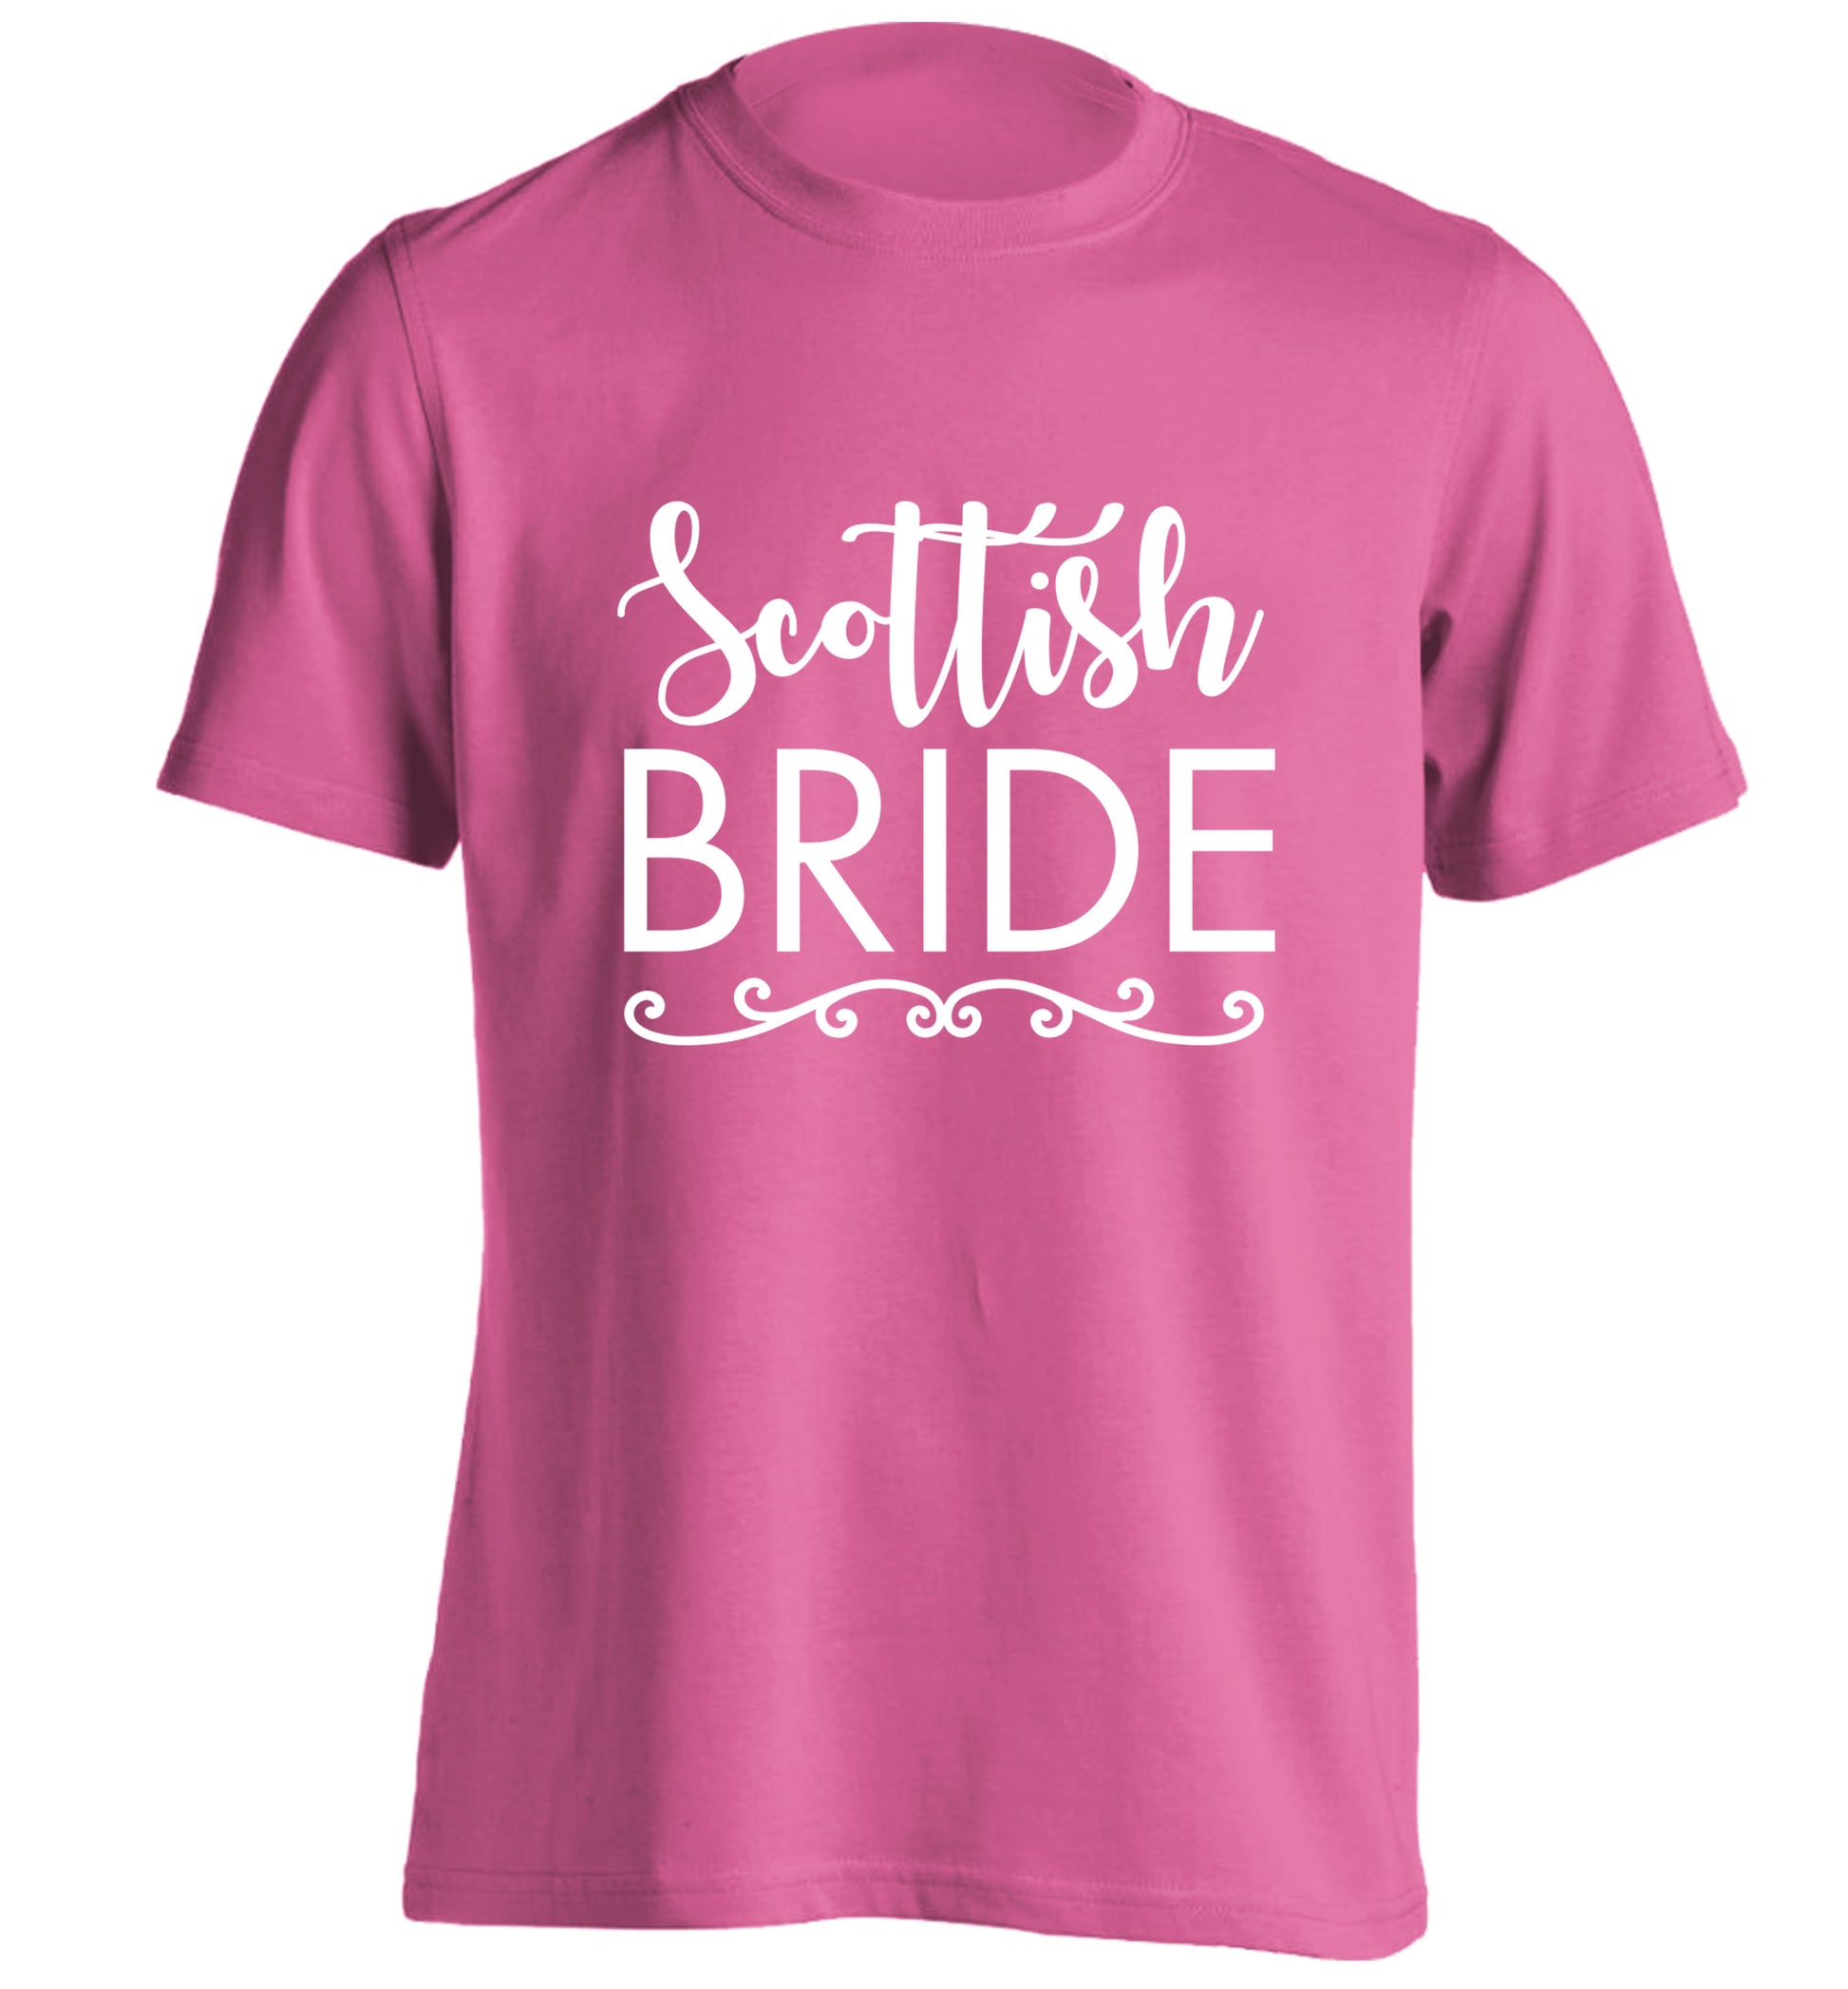 Scottish Bride adults unisex pink Tshirt 2XL